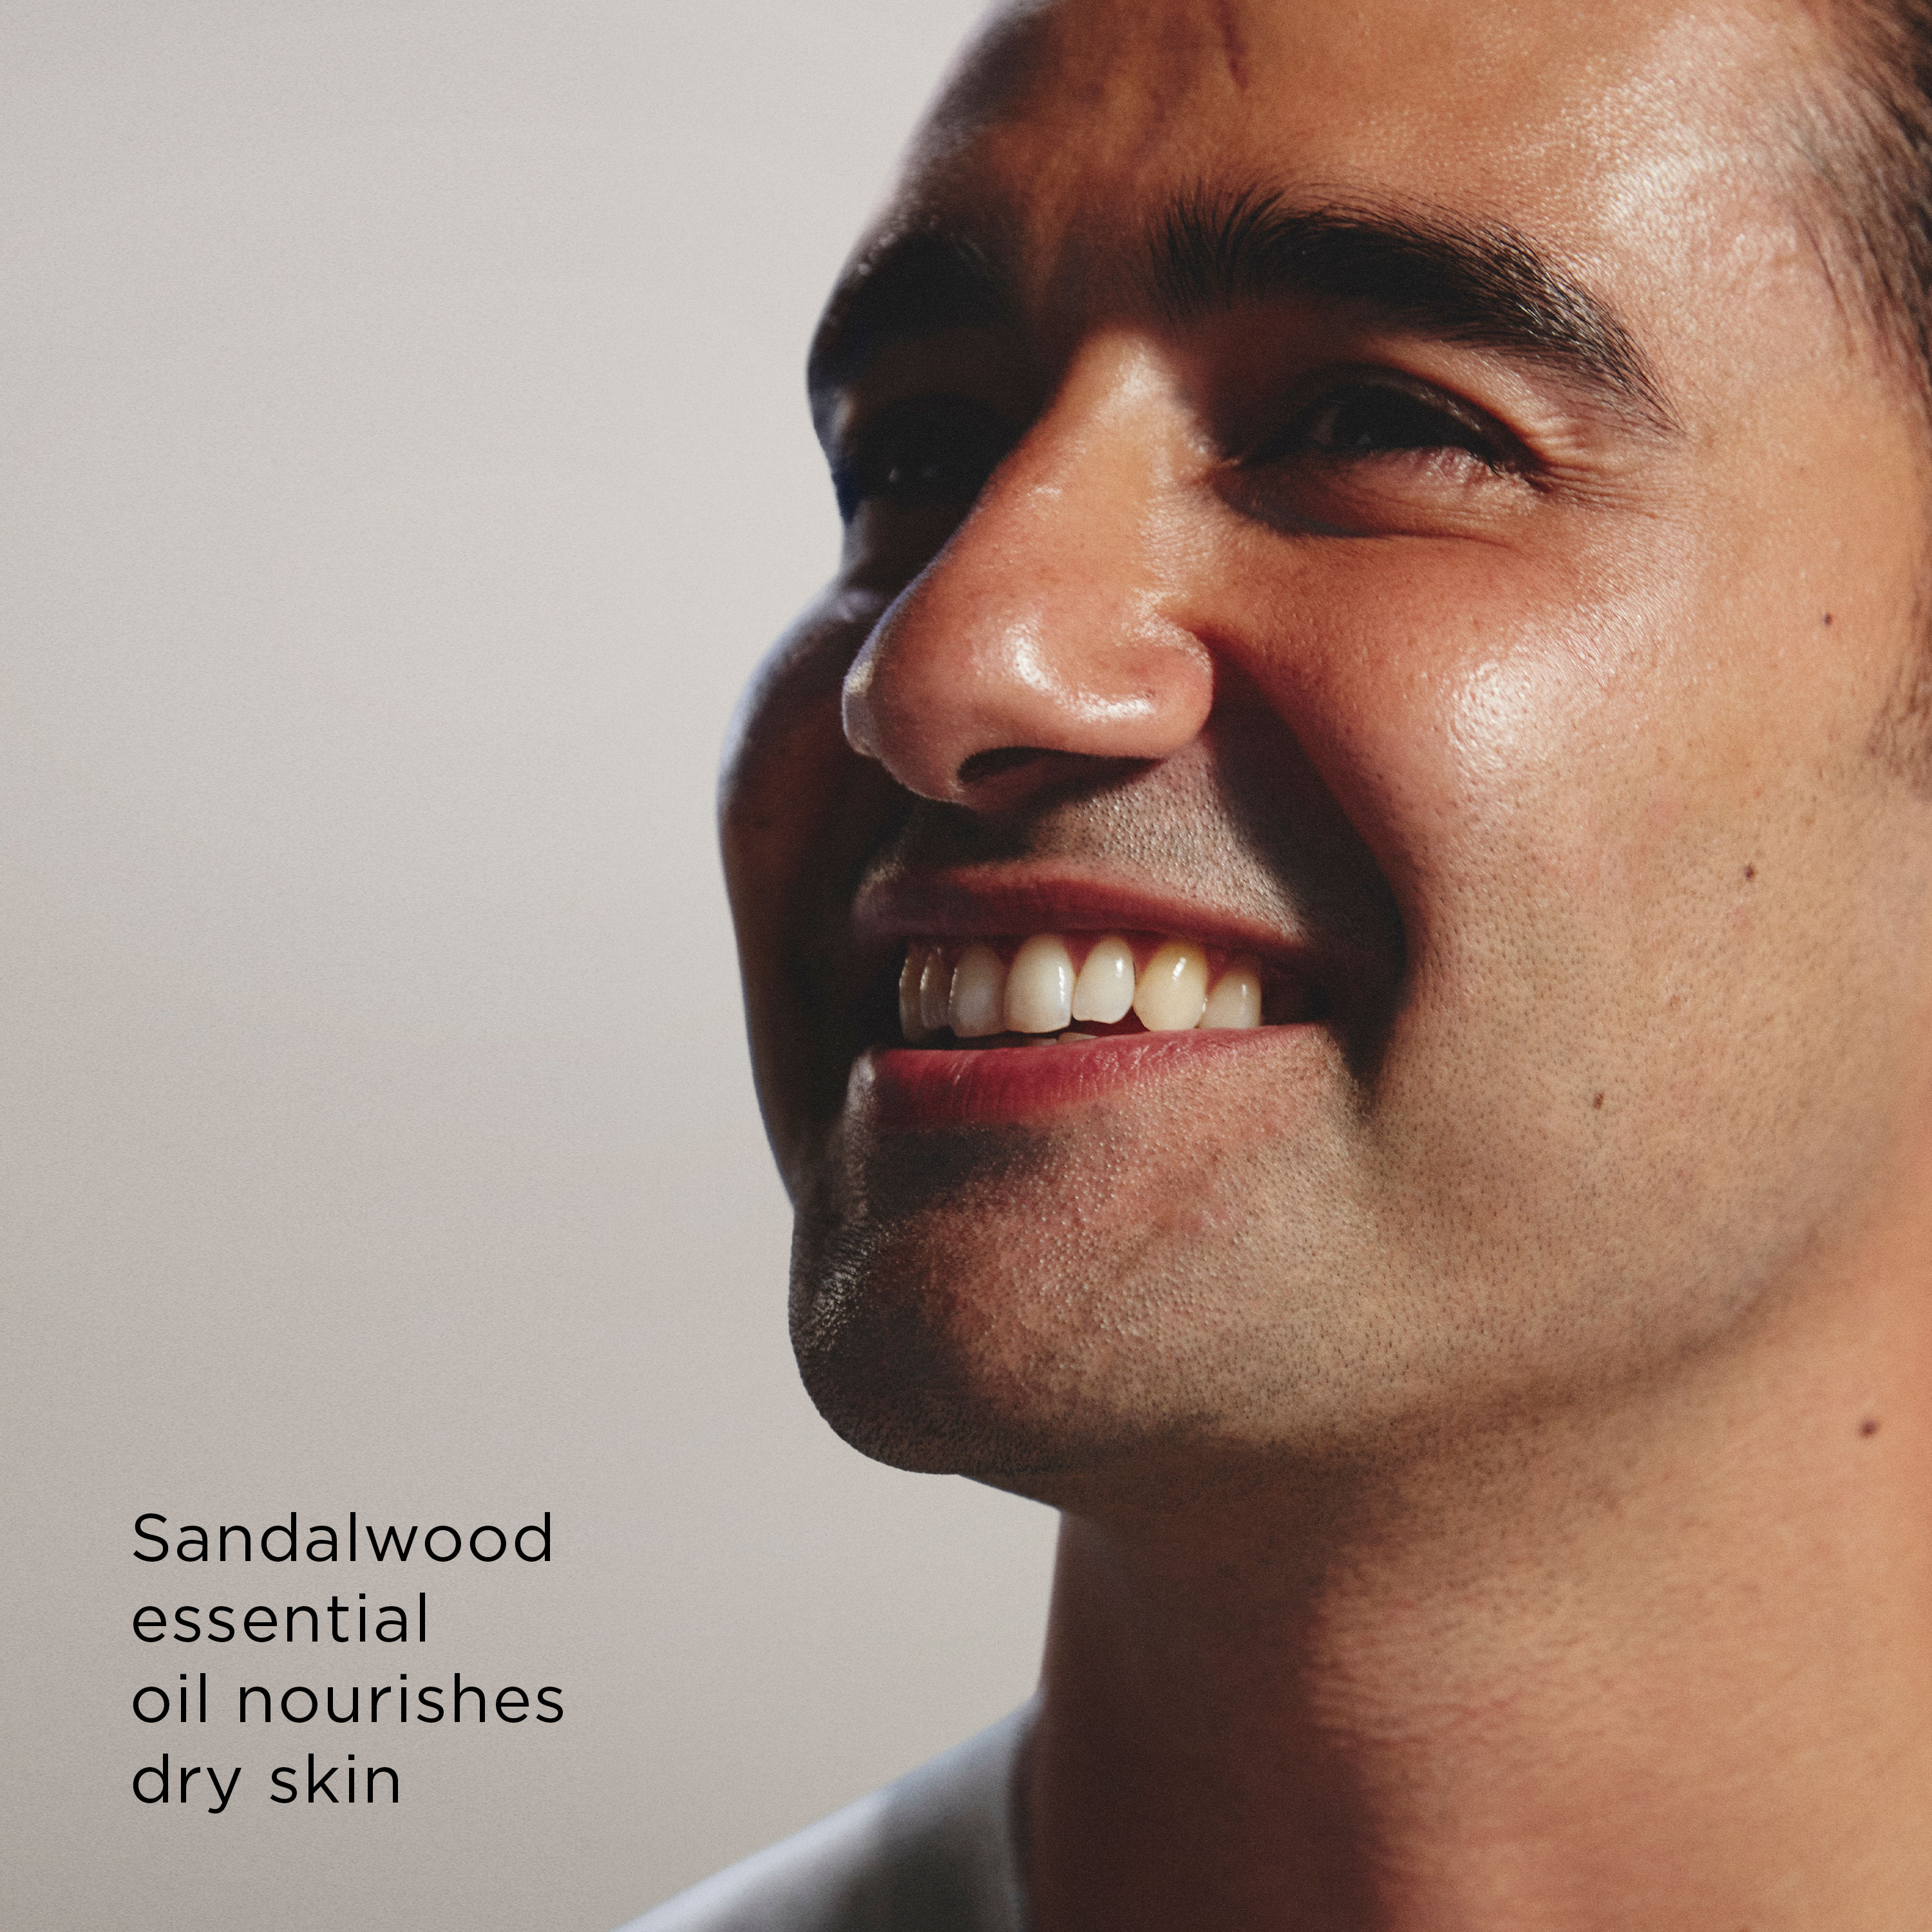 Sandalwood essential oil nourishes dry skin.